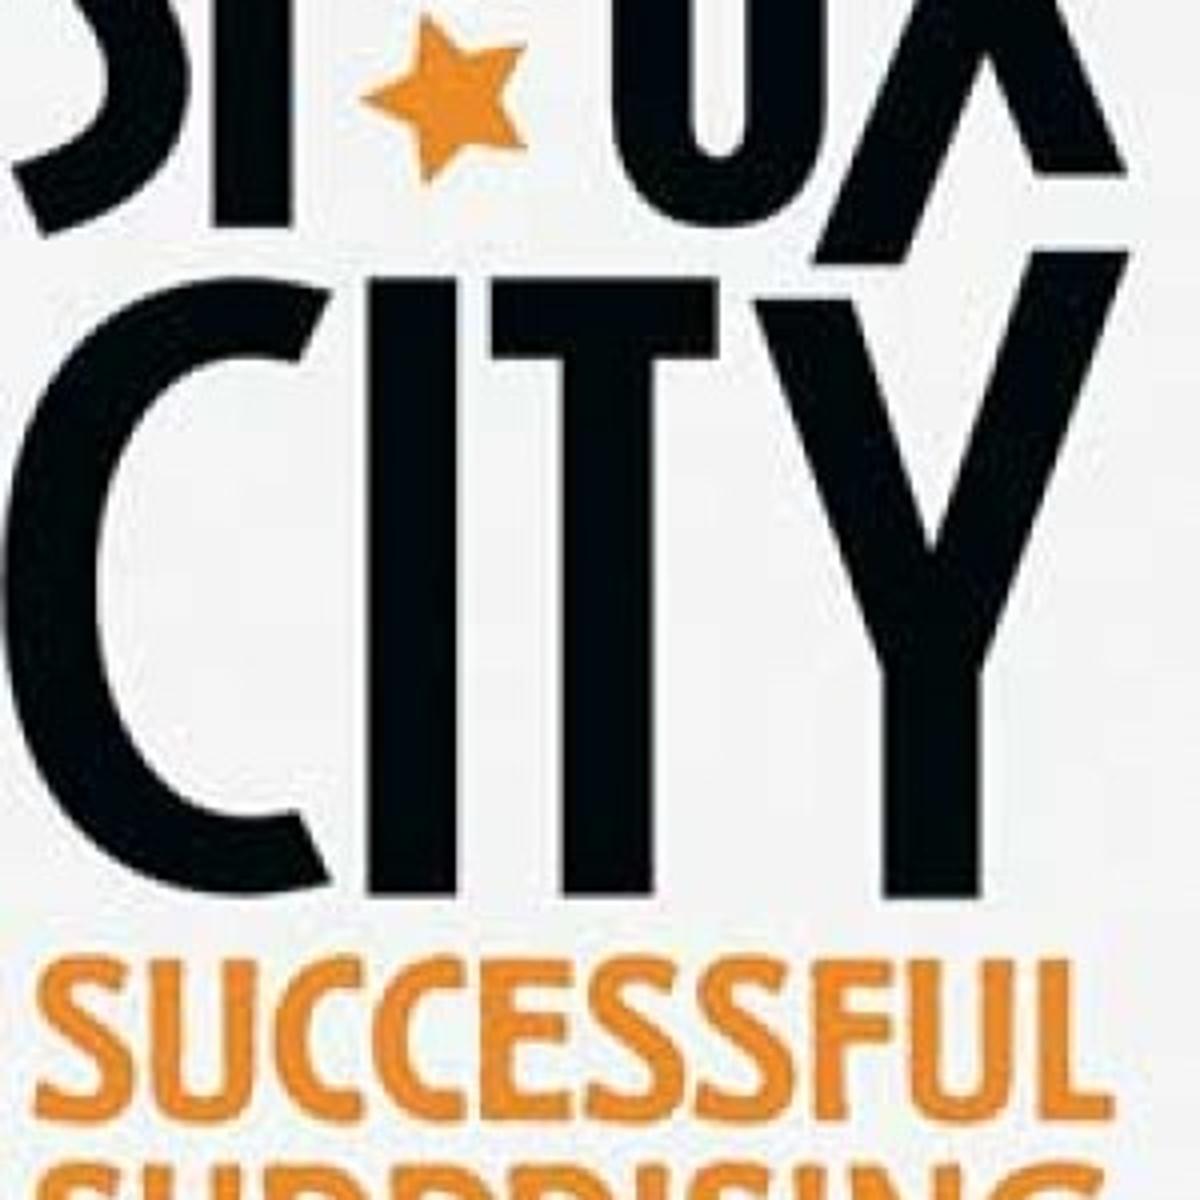 Sioux Logo - It's a Supercalifragilisticexpialidocious Sioux City logo | Opinion ...